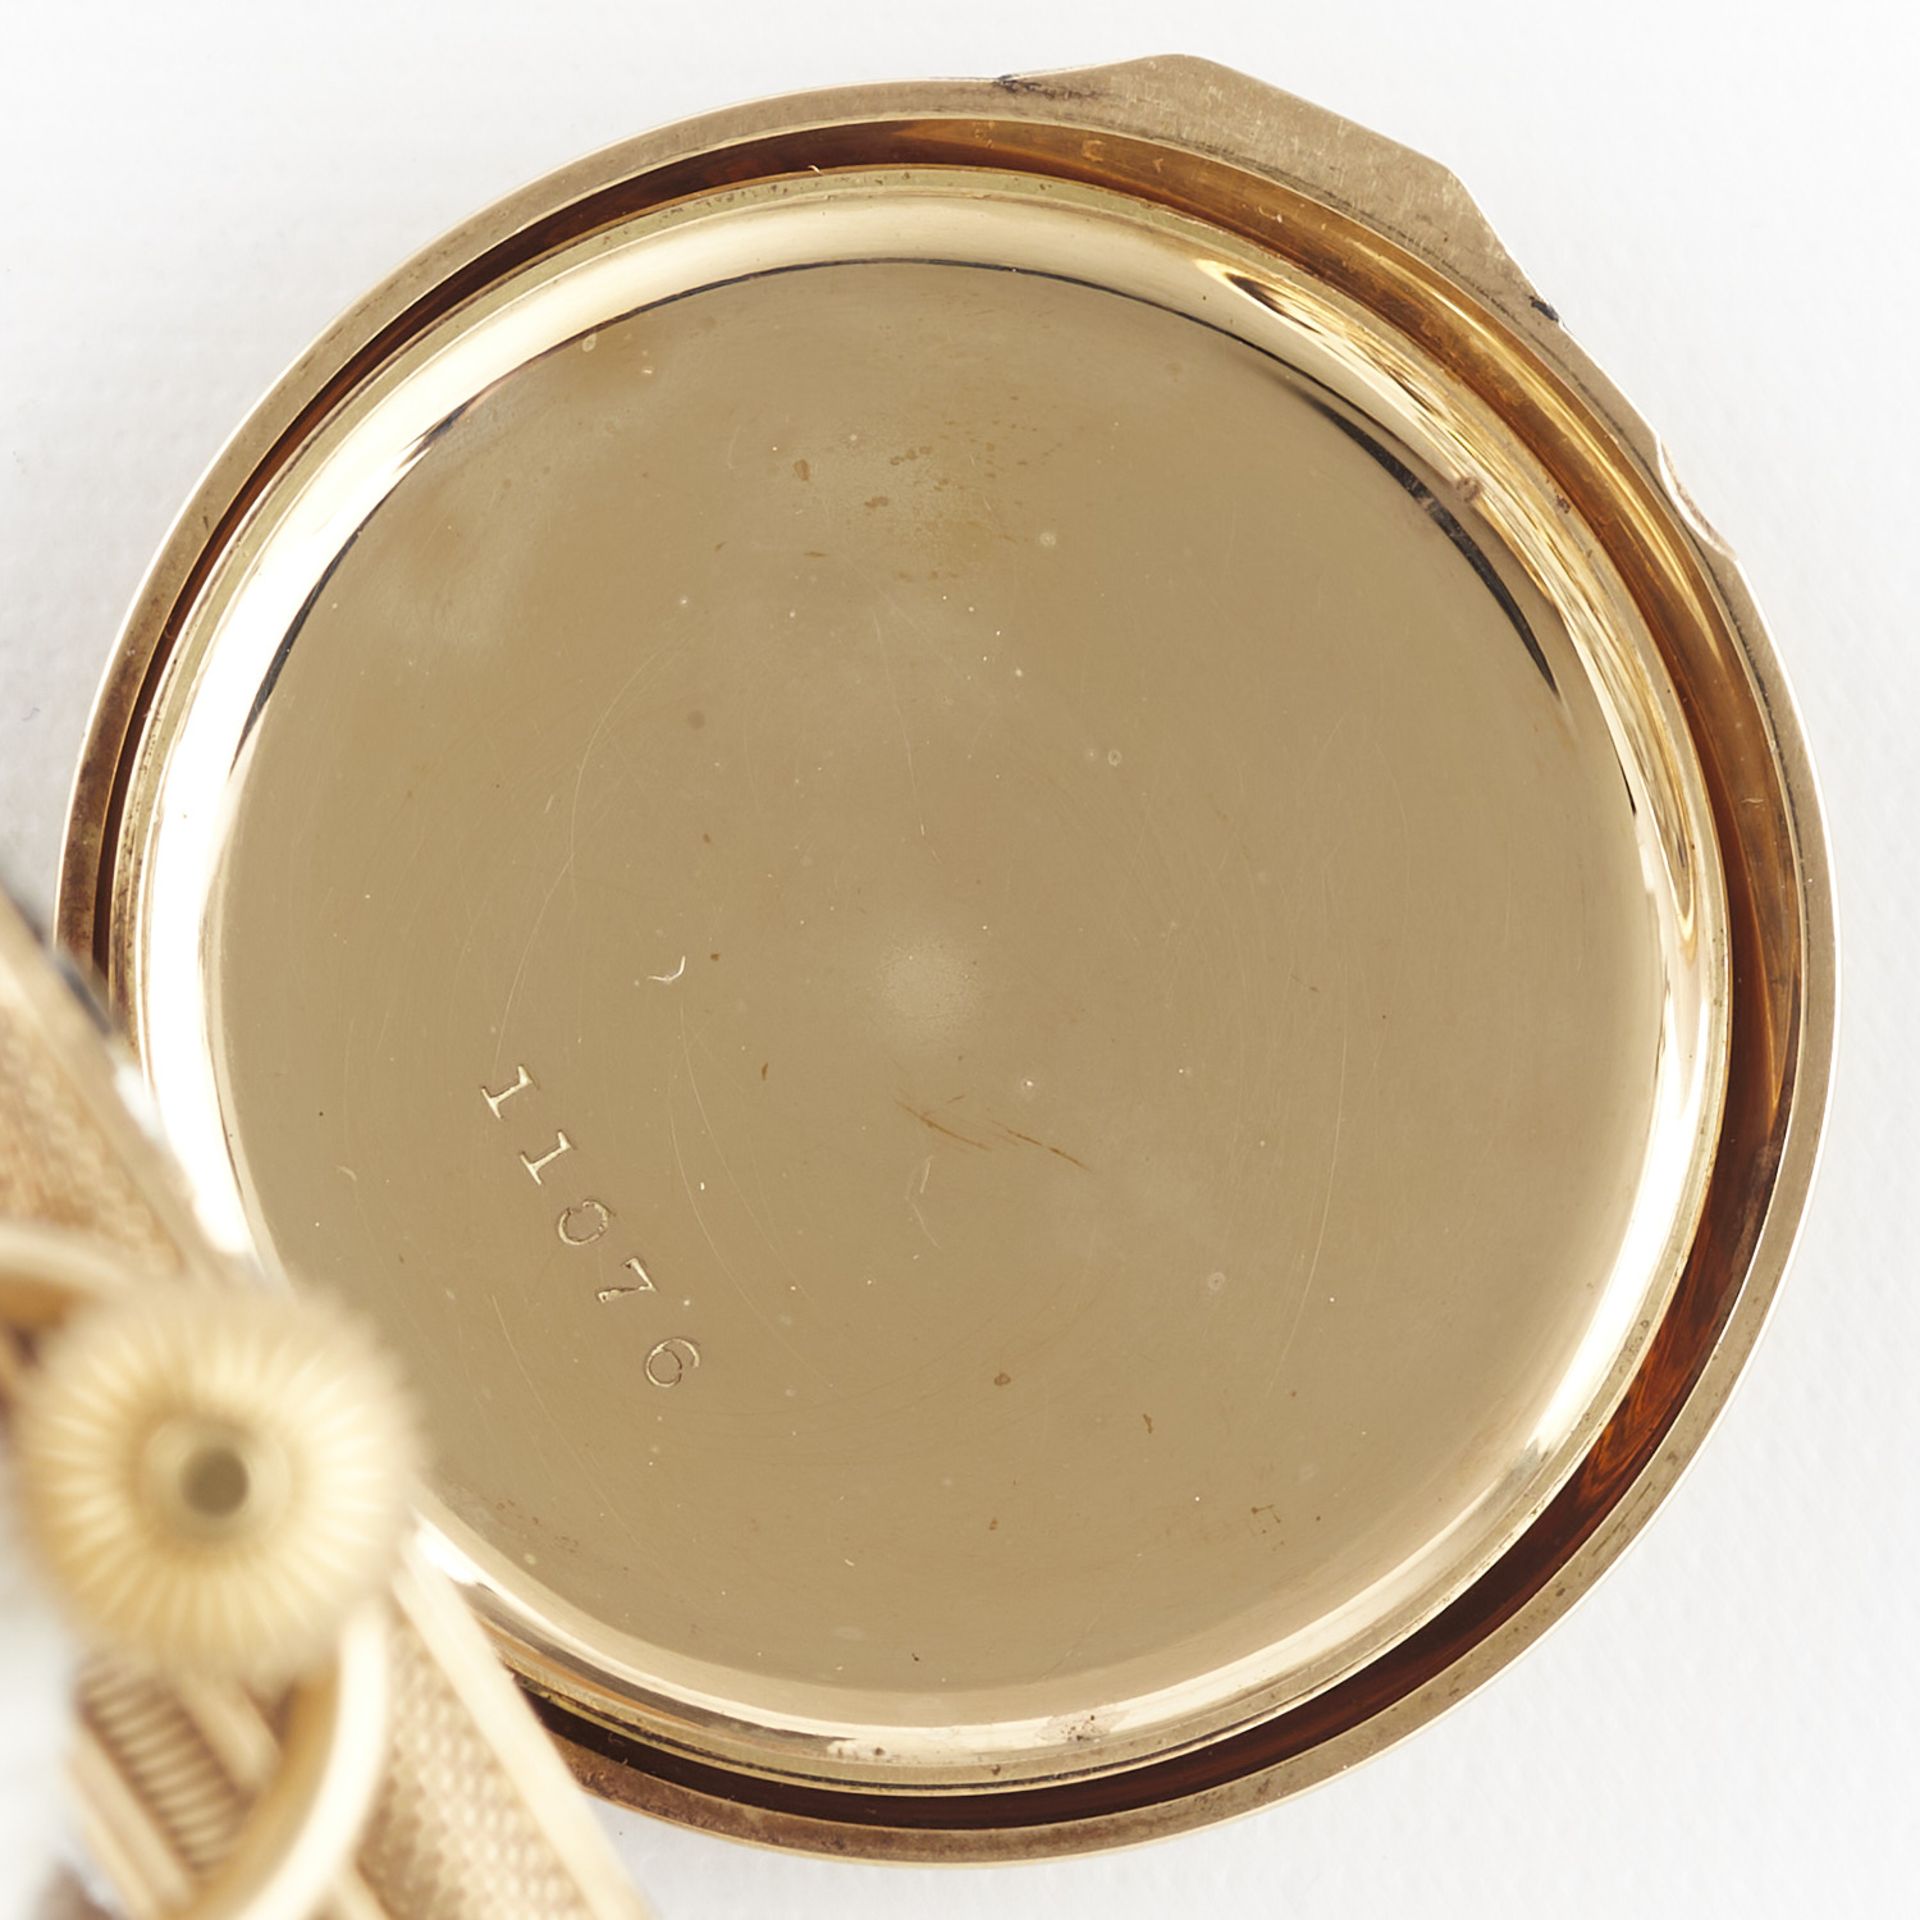 Columbus Green Patent 14k Gold Pocket Watch - Image 5 of 6